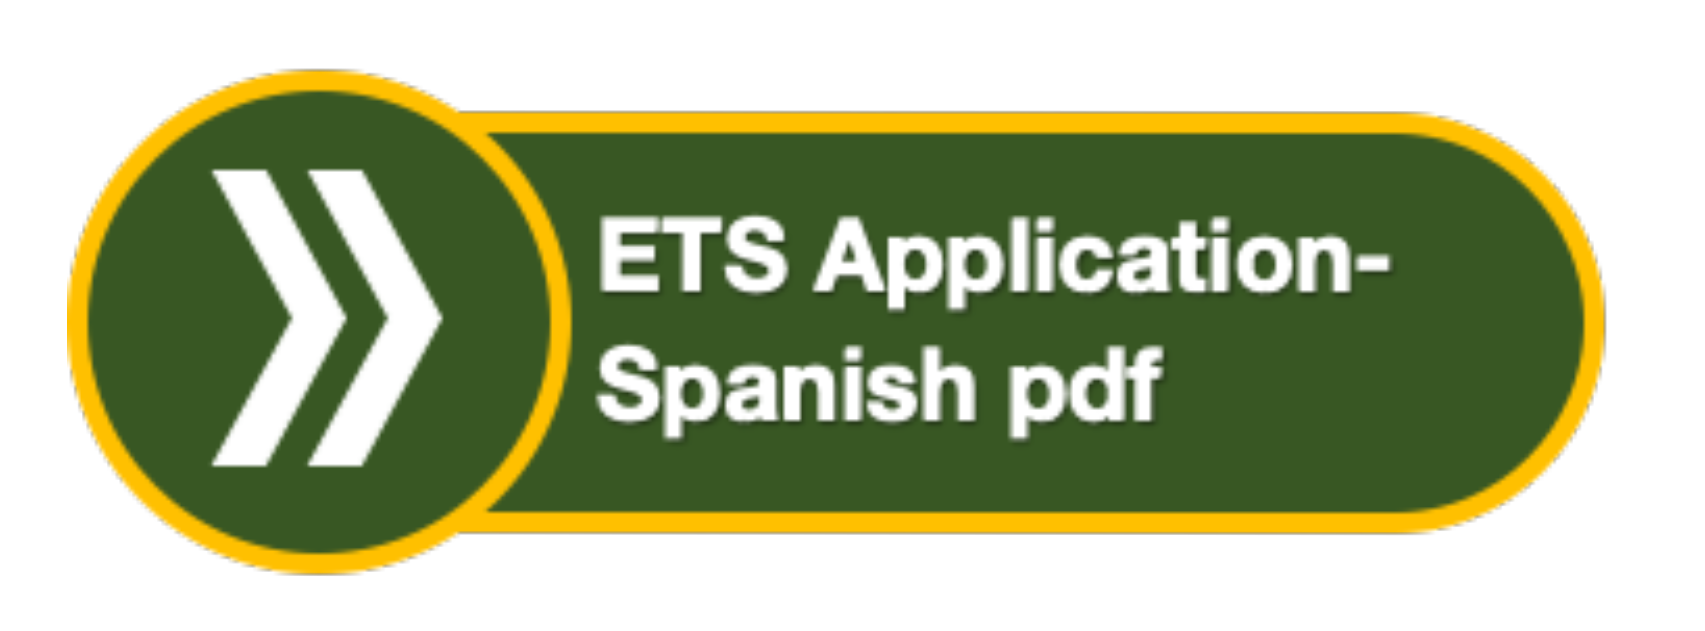 Printable ETS Spanish application